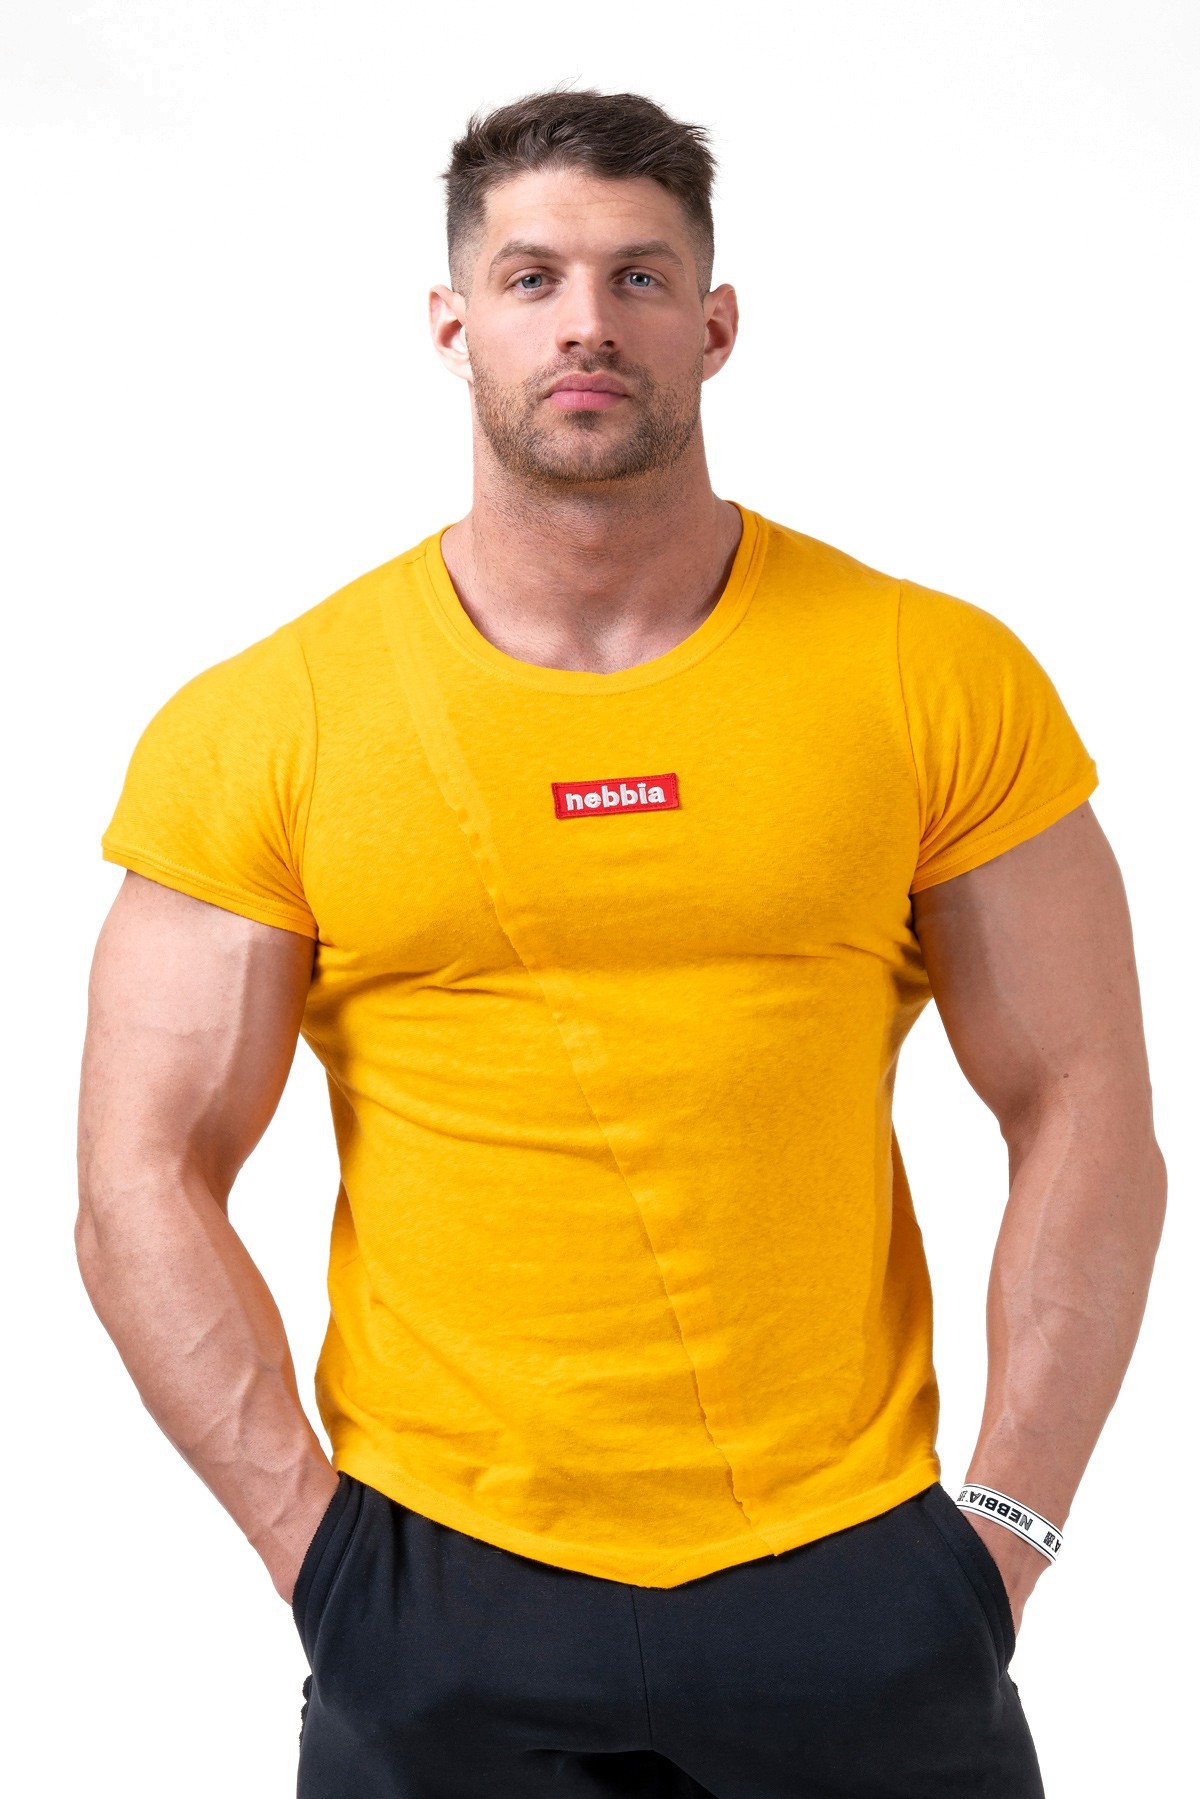 Nebbia Red Label Muscle Back tričko 172 - yellow - L